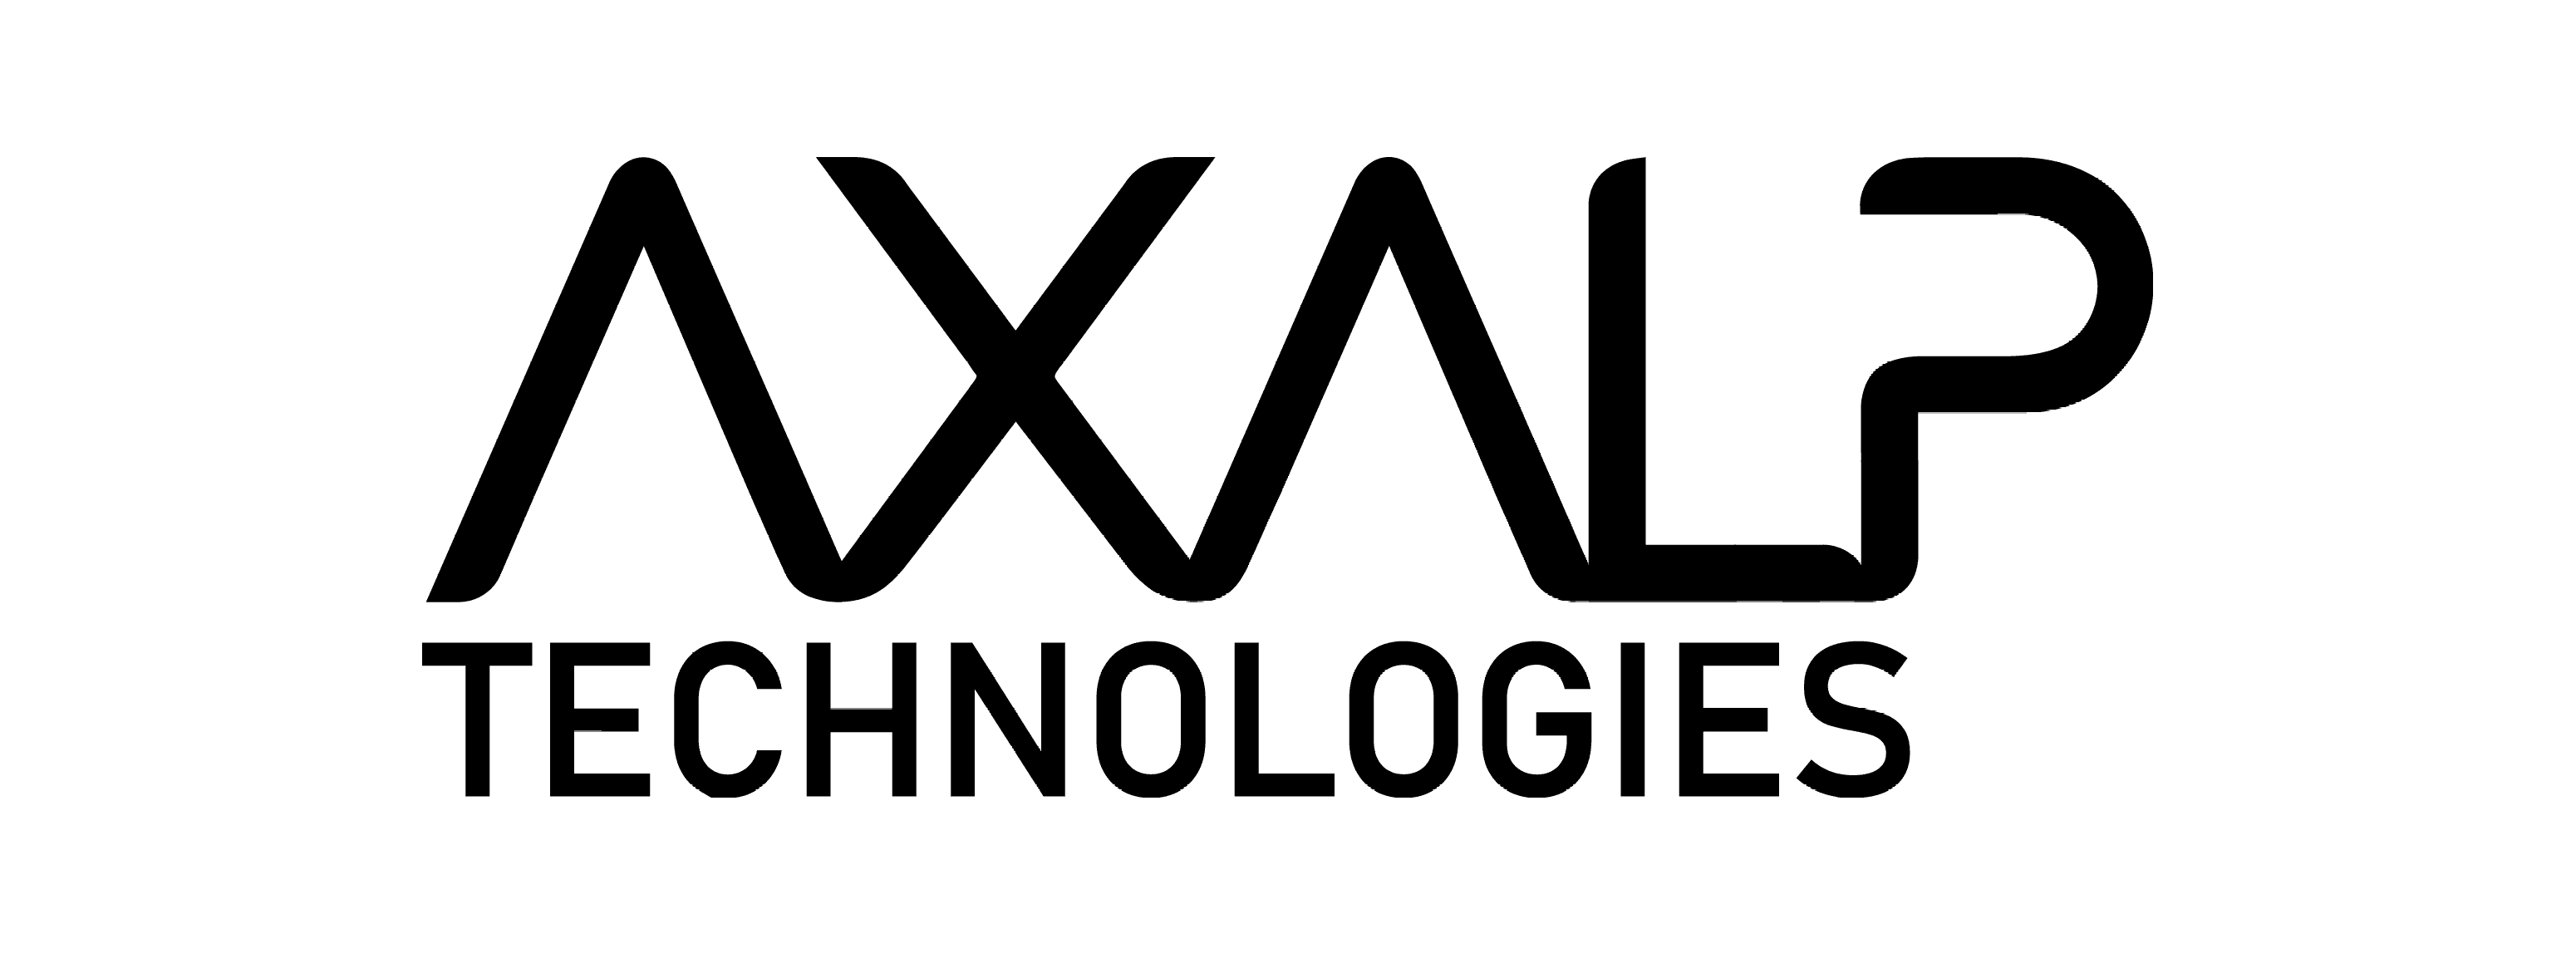 The logo of Axalp Technologies. They are sponsor of amz racing.